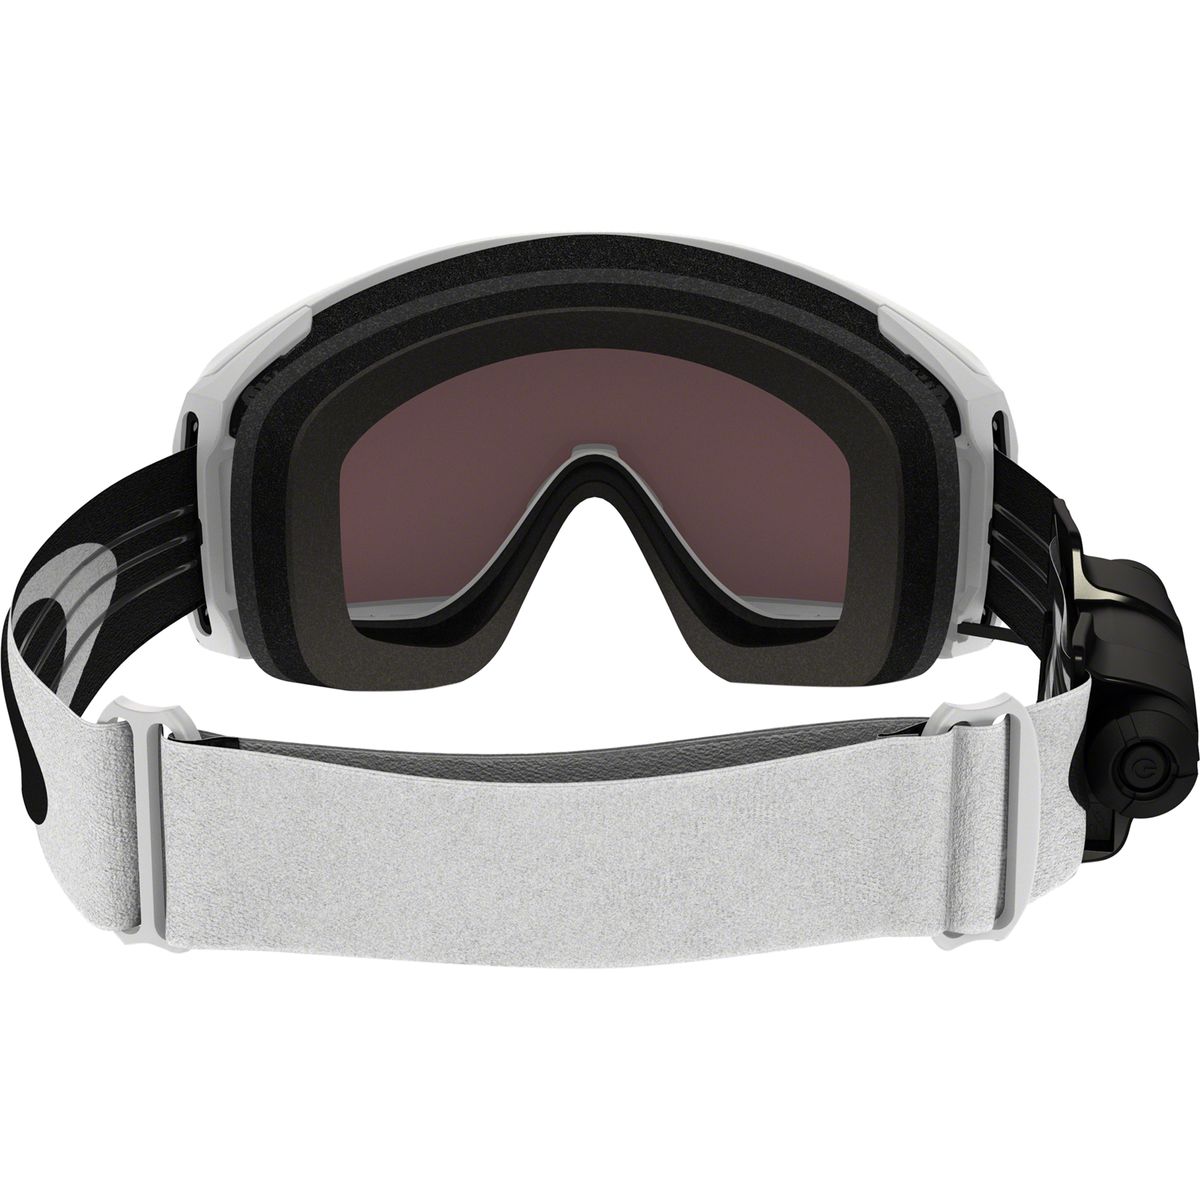 Inferno Ski Goggles - COOL HUNTING®